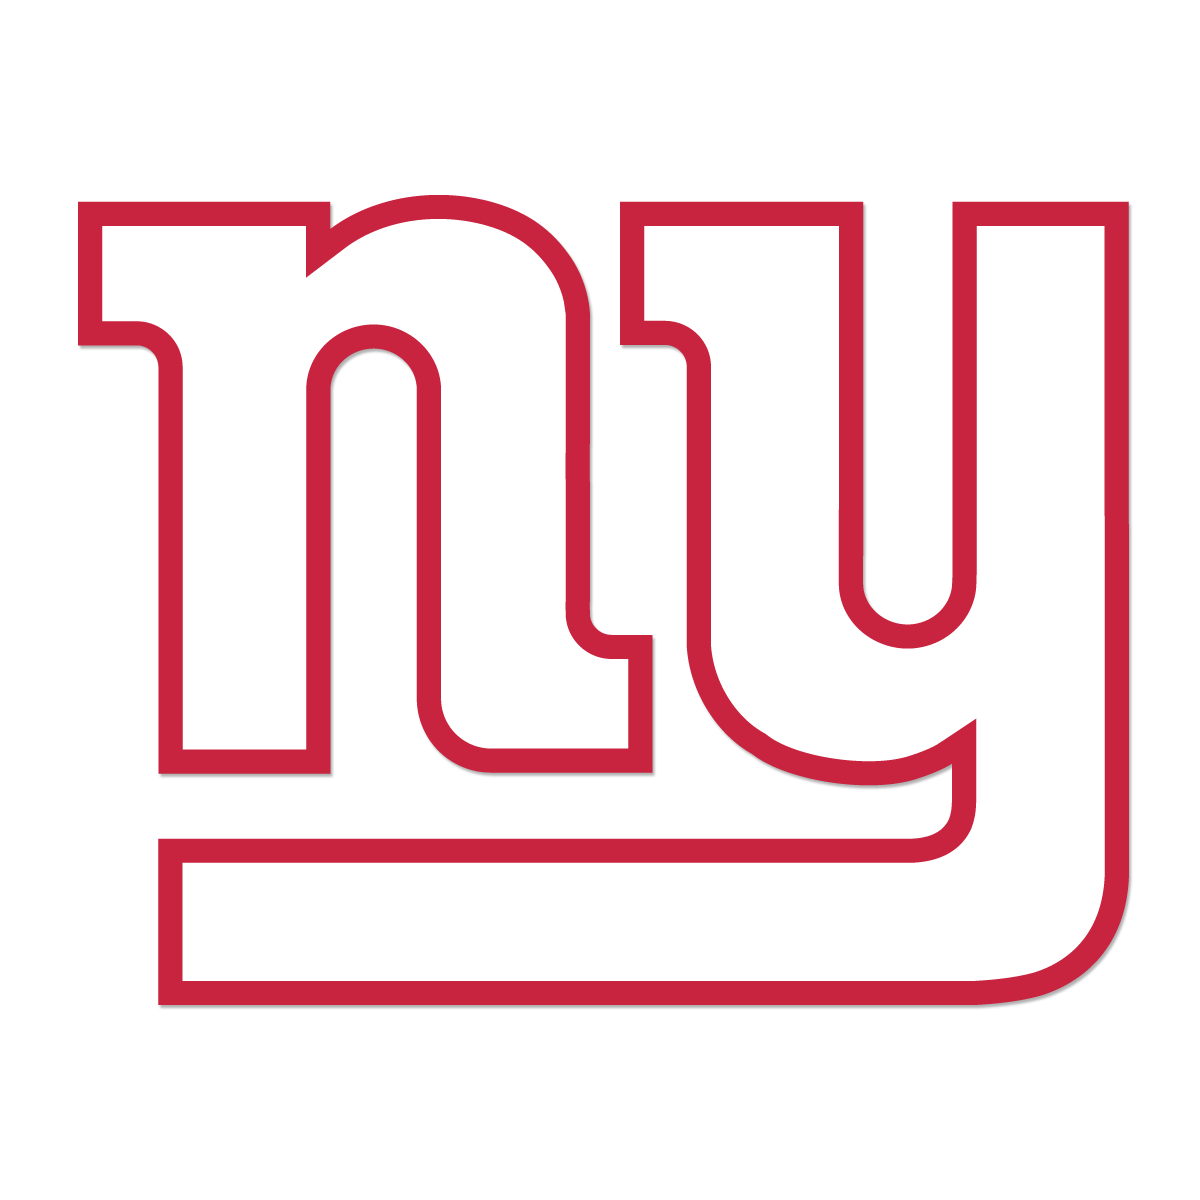 New York Giants Logo PNG Photos